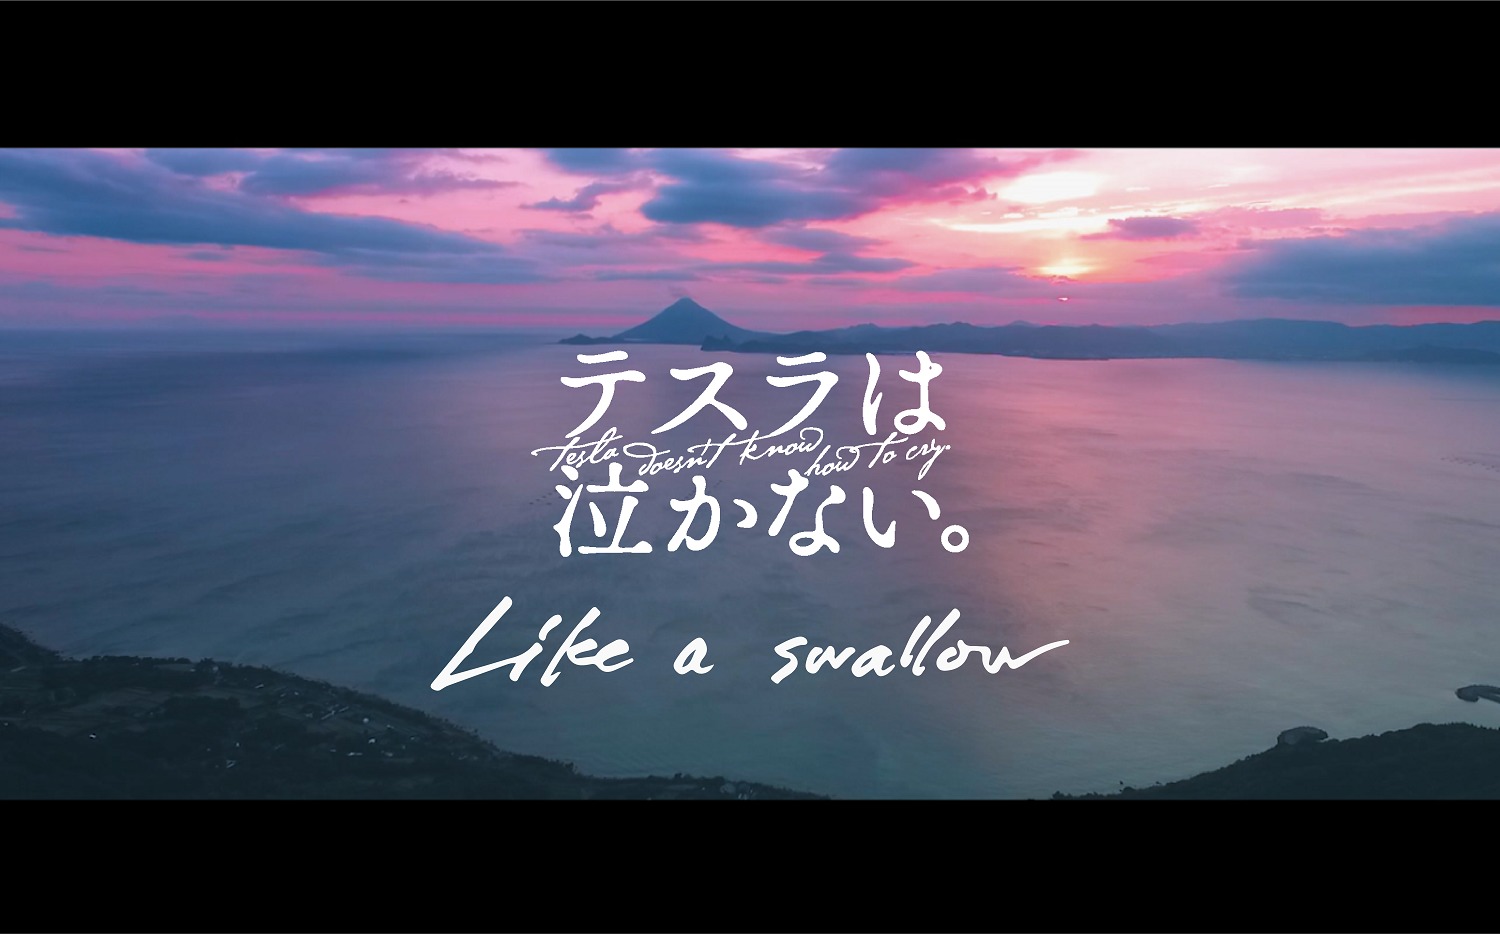 「Like a swallow」MVより